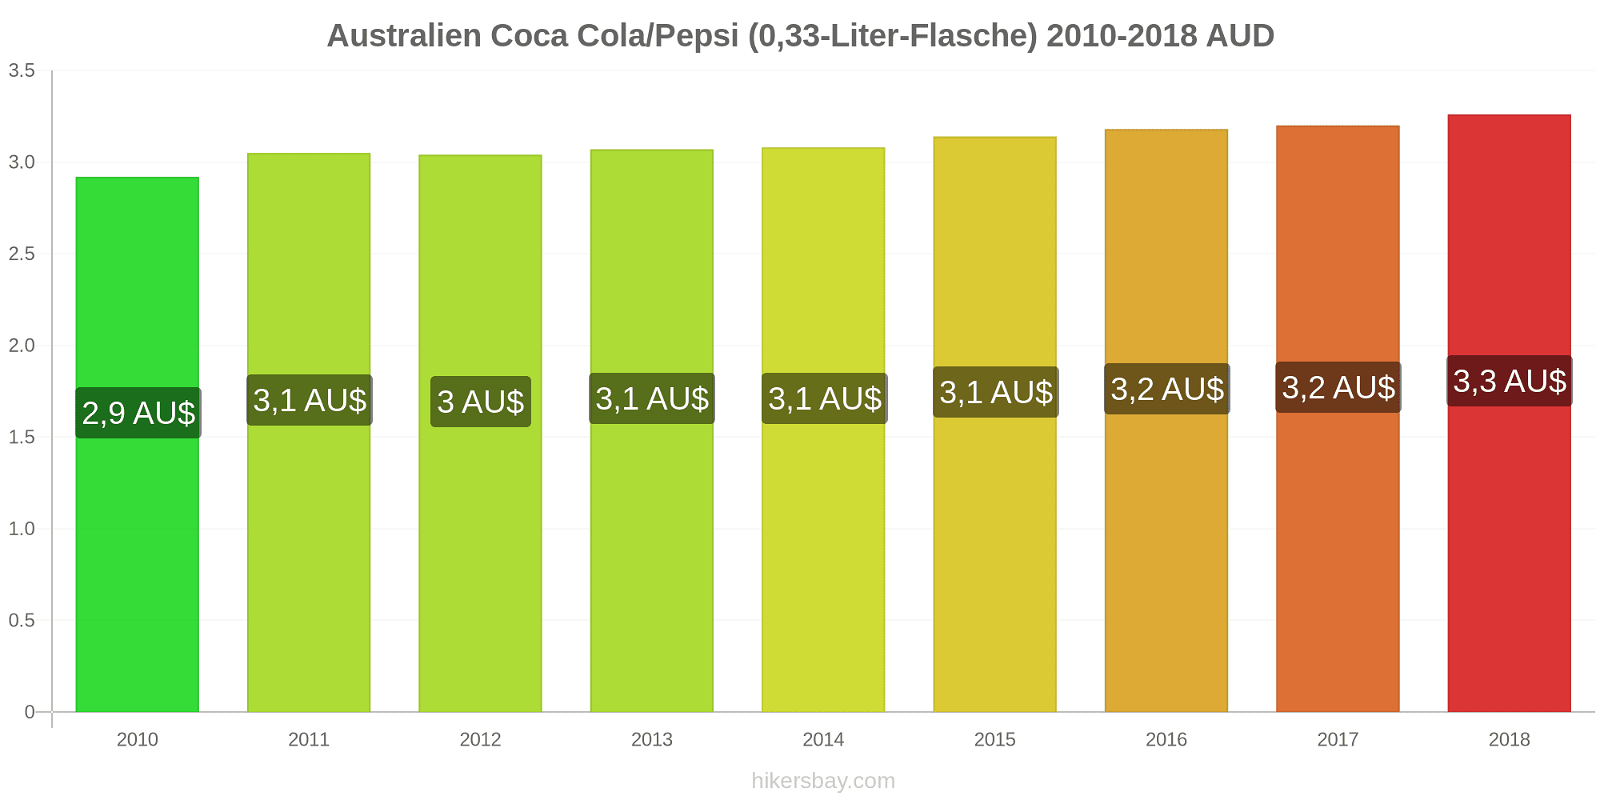 Australien Preisänderungen Coke/Pepsi (0,33-Liter-Flasche) hikersbay.com